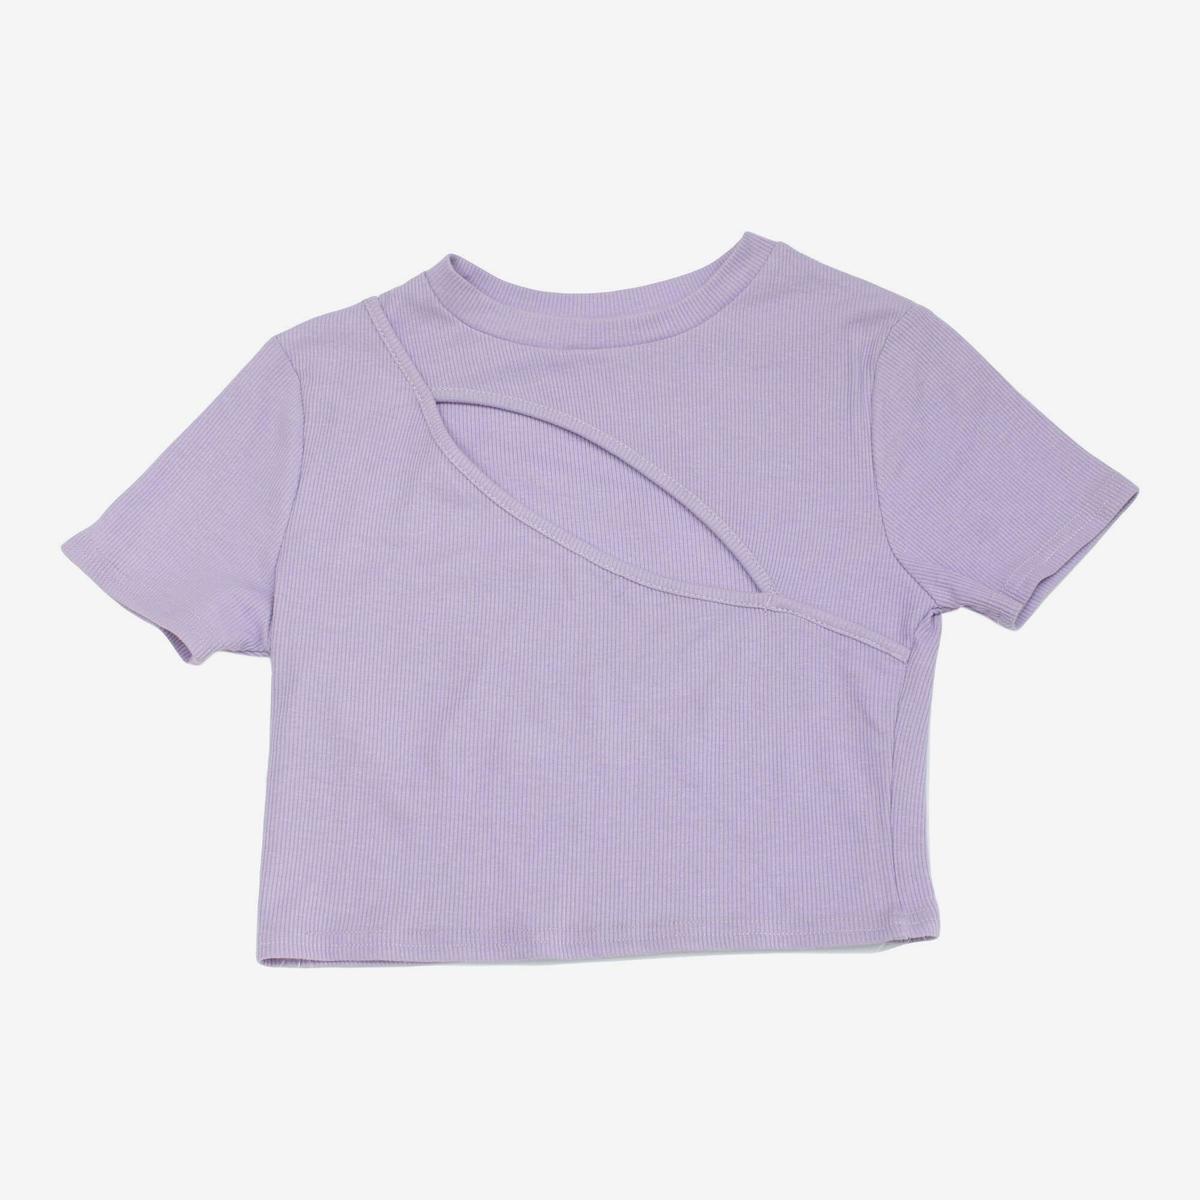 purple plain lining crop tshirt for women